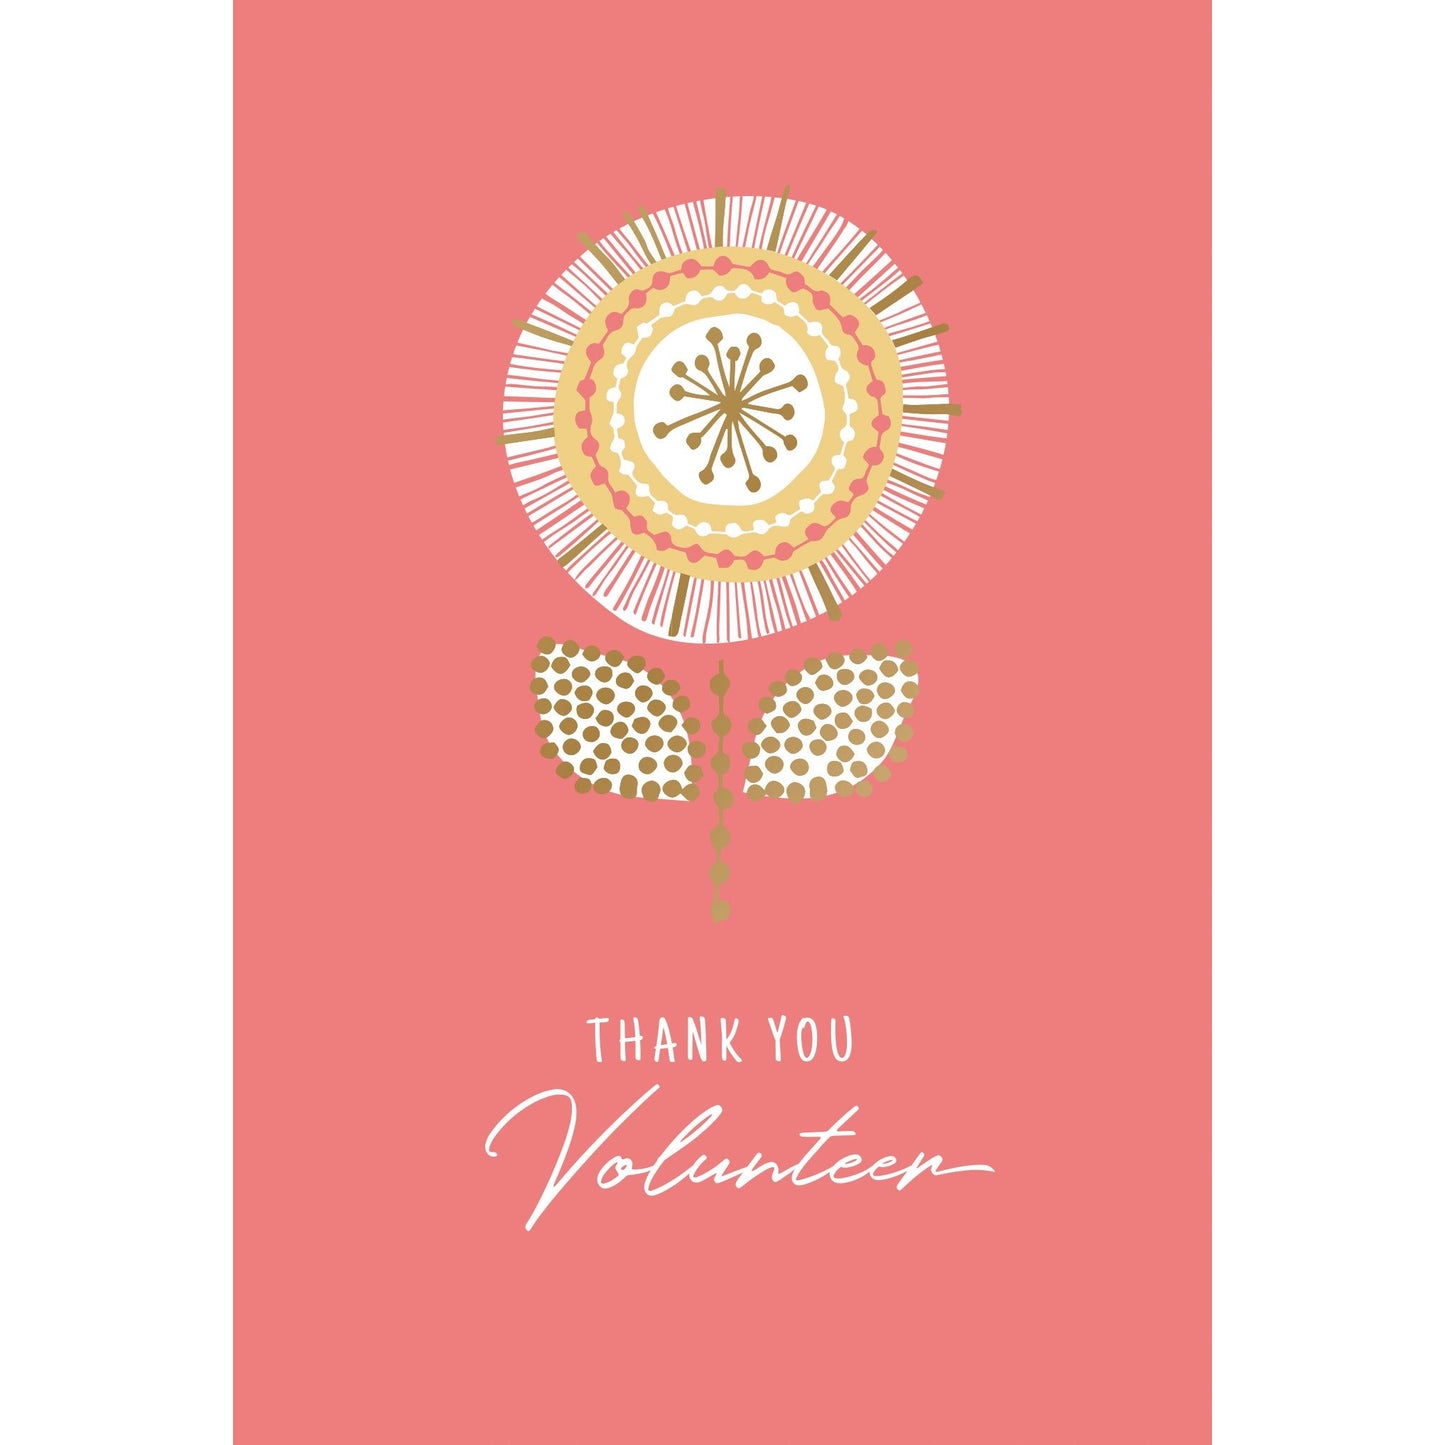 Thank You Volunteer Card Sunburst Flower - Cardmore